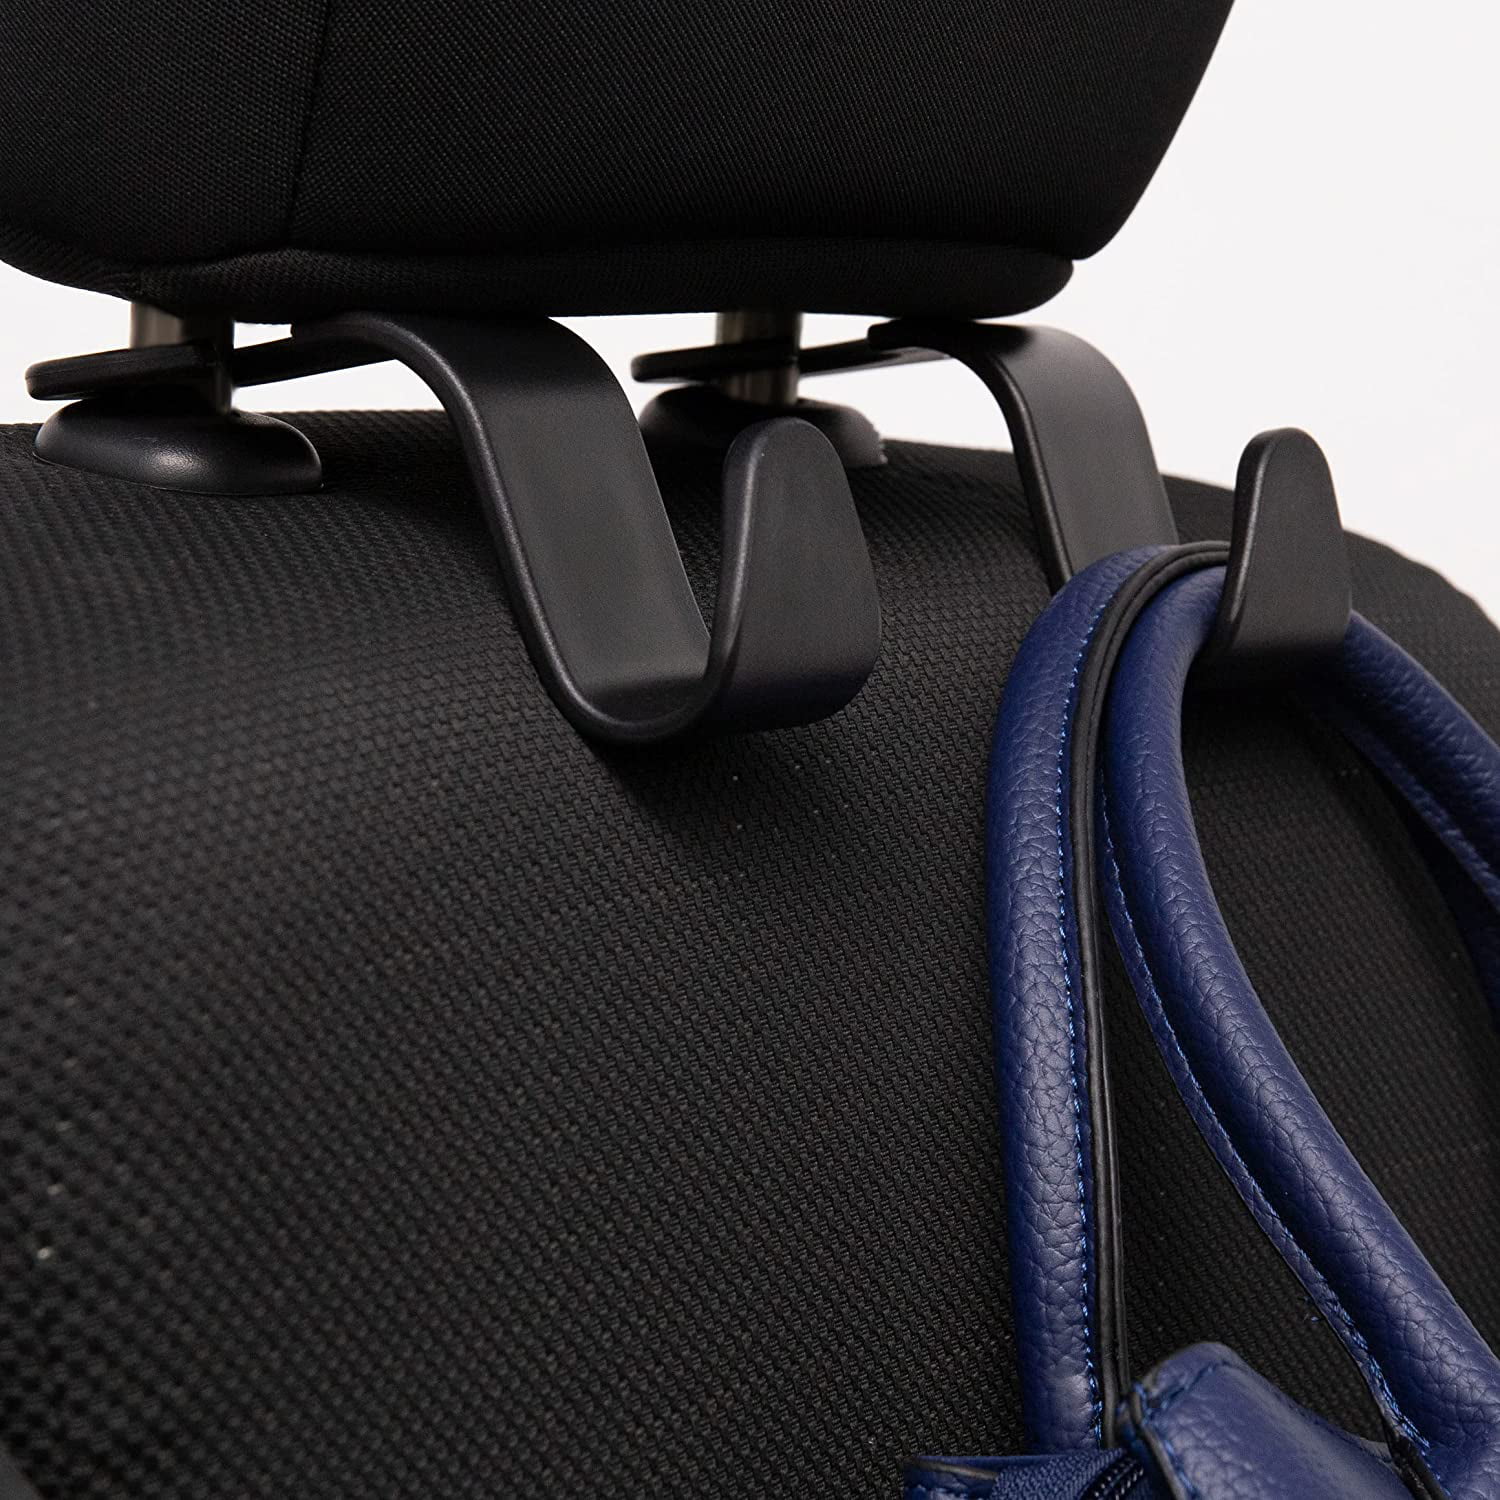 IPELY IPELY-HOOK4 Car Suv Back Seat Headrest Hanger Storage Hooks Black -Set of 4 